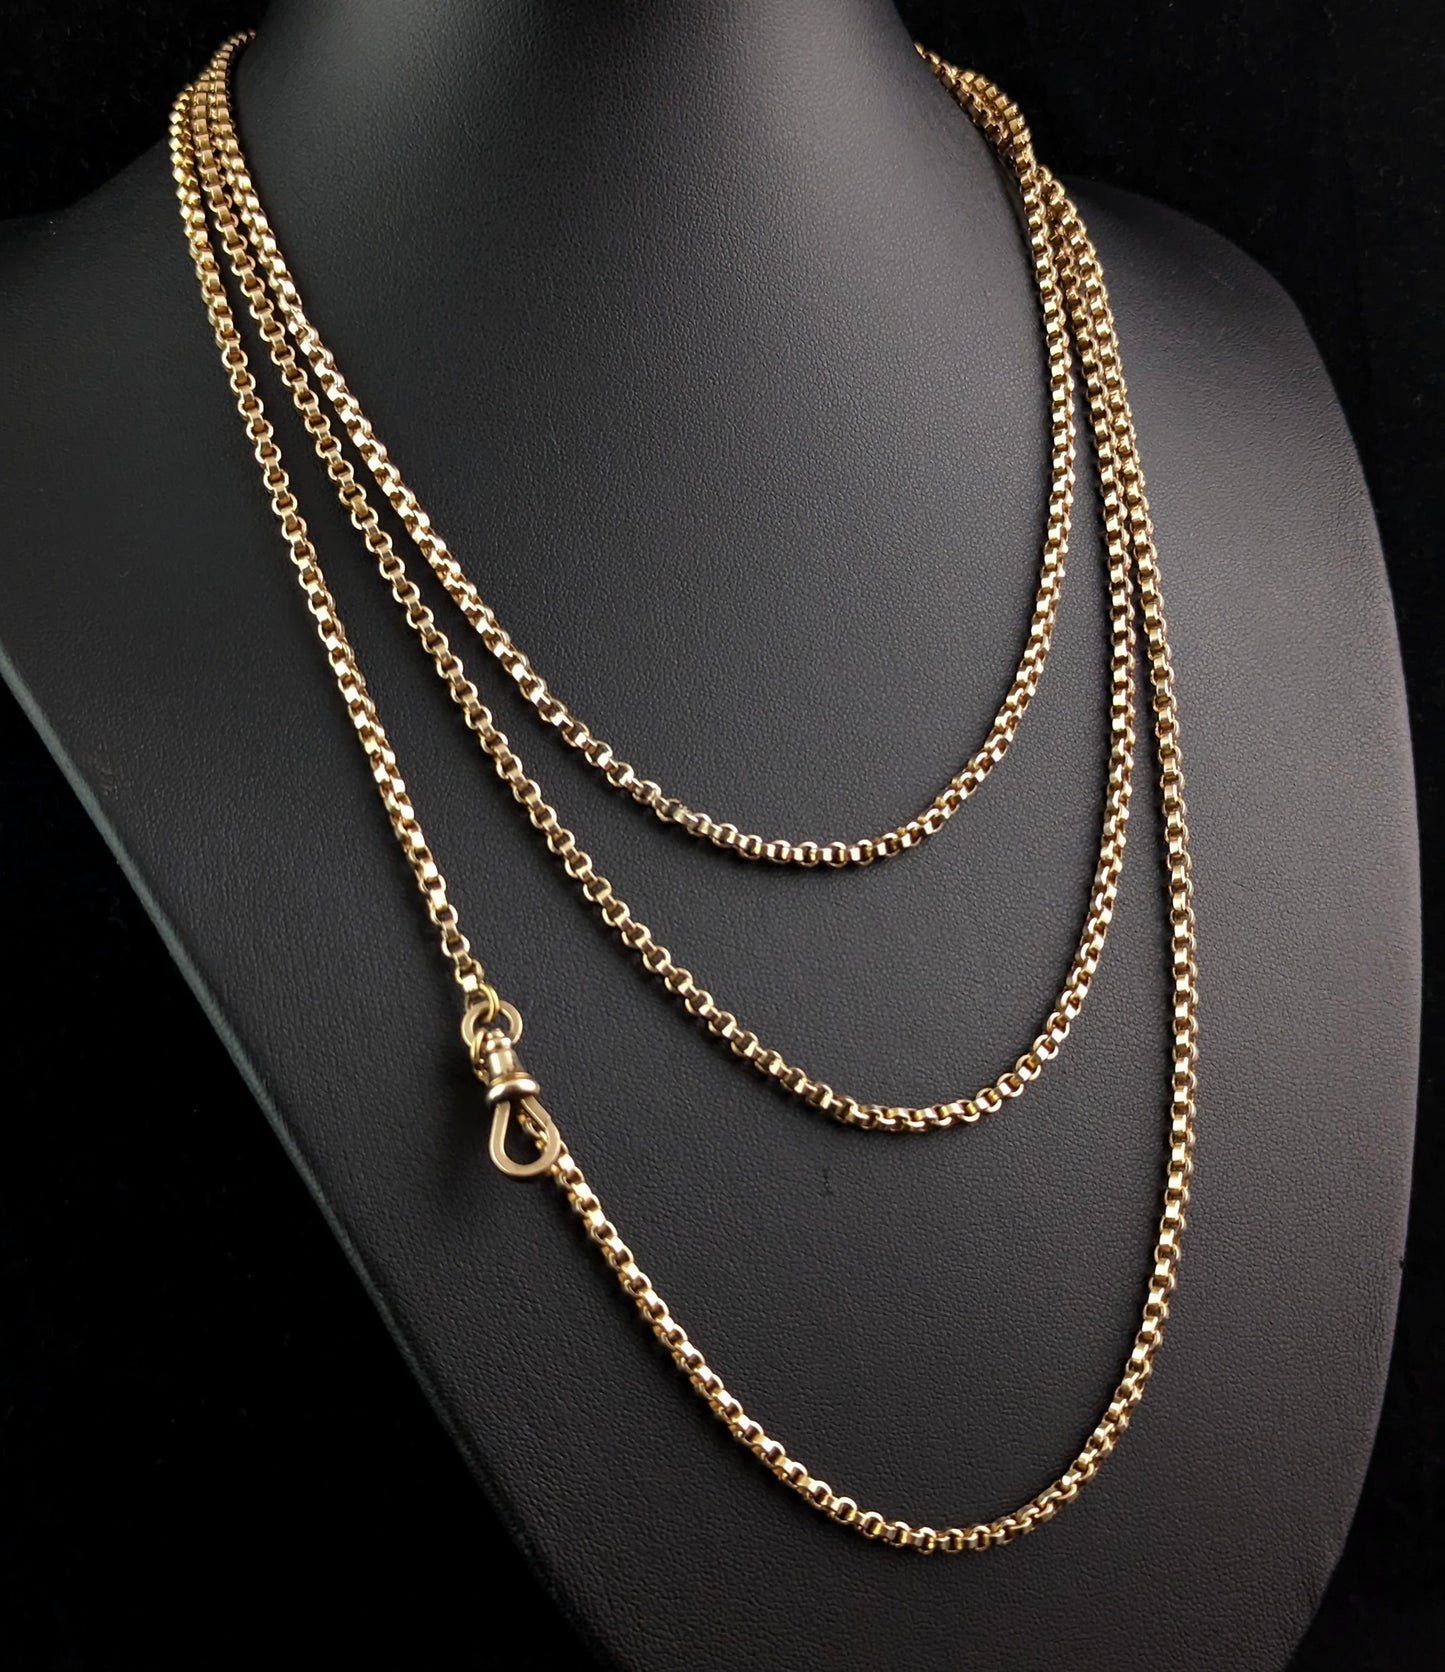 Antique 9ct gold longuard chain necklace, Victorian